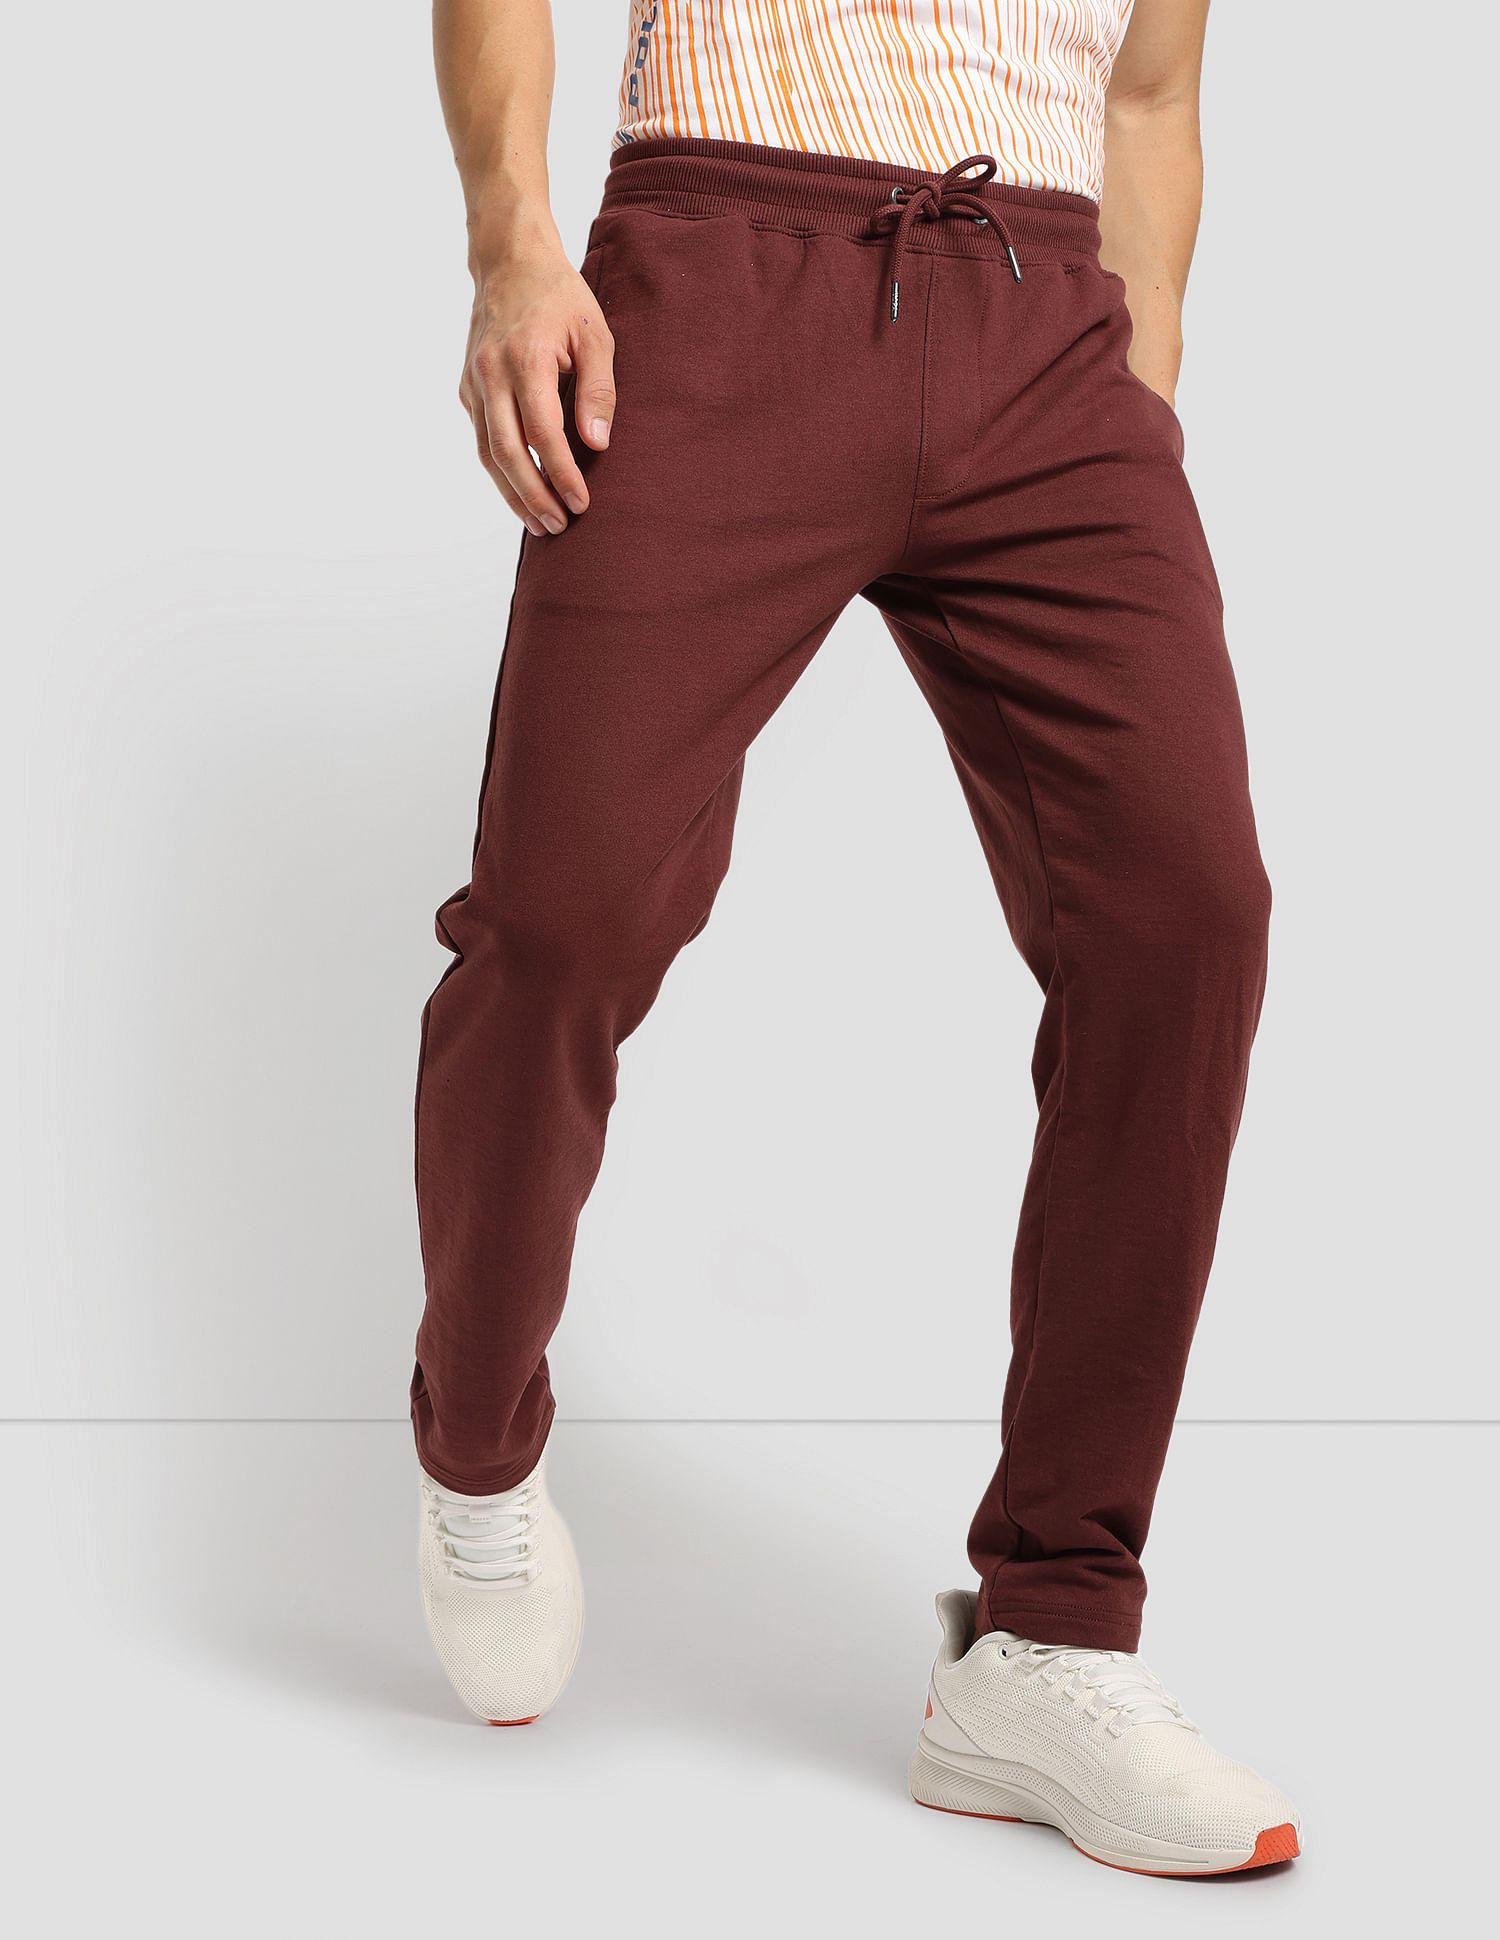 Buy Green Track Pants for Men by Styli Online  Ajiocom